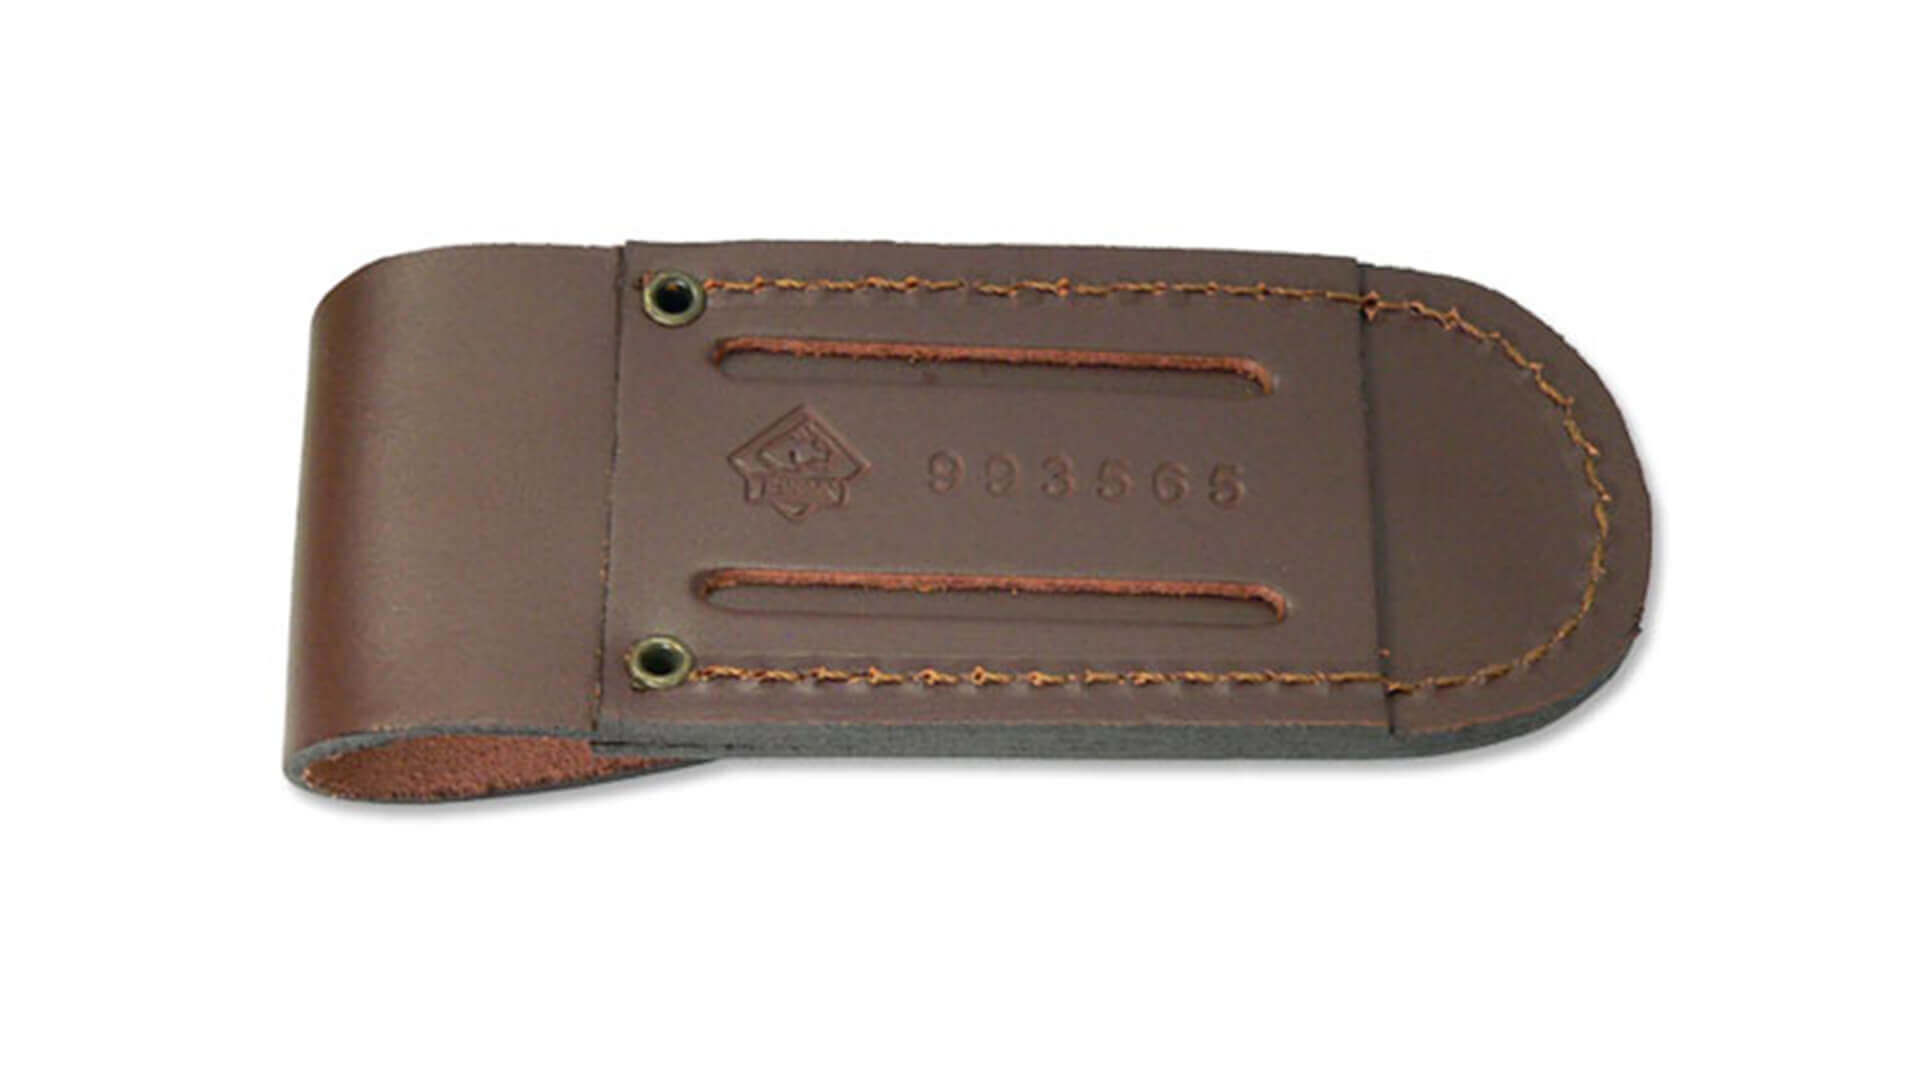 puma-belt-case-brown-rear-view-993565